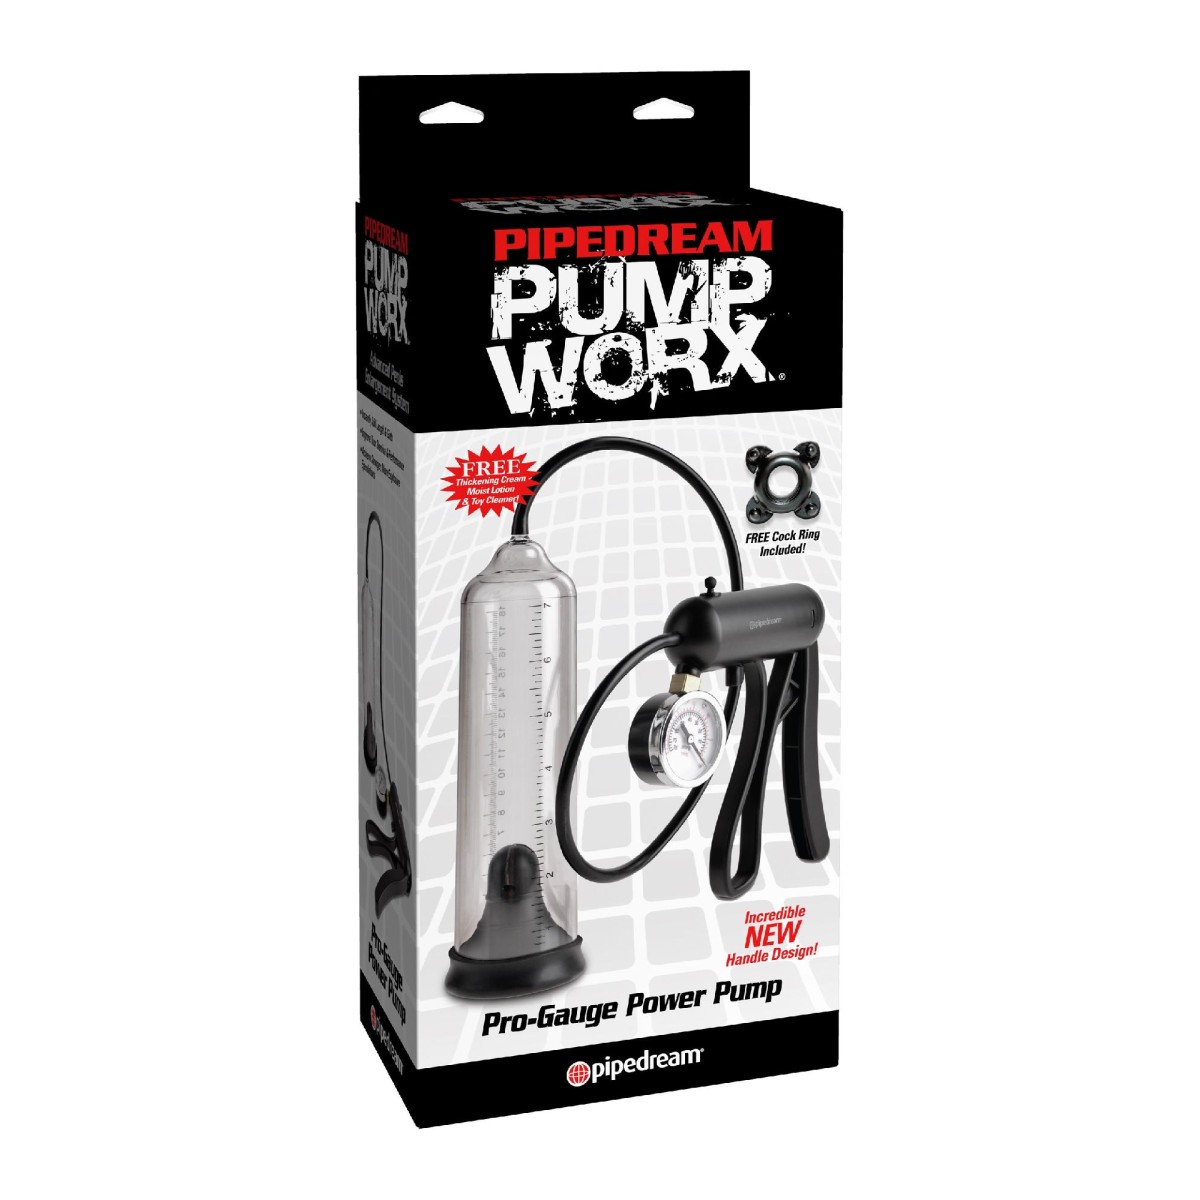 Pompa per pene Pump Worx Pro-Gauge Power Pump